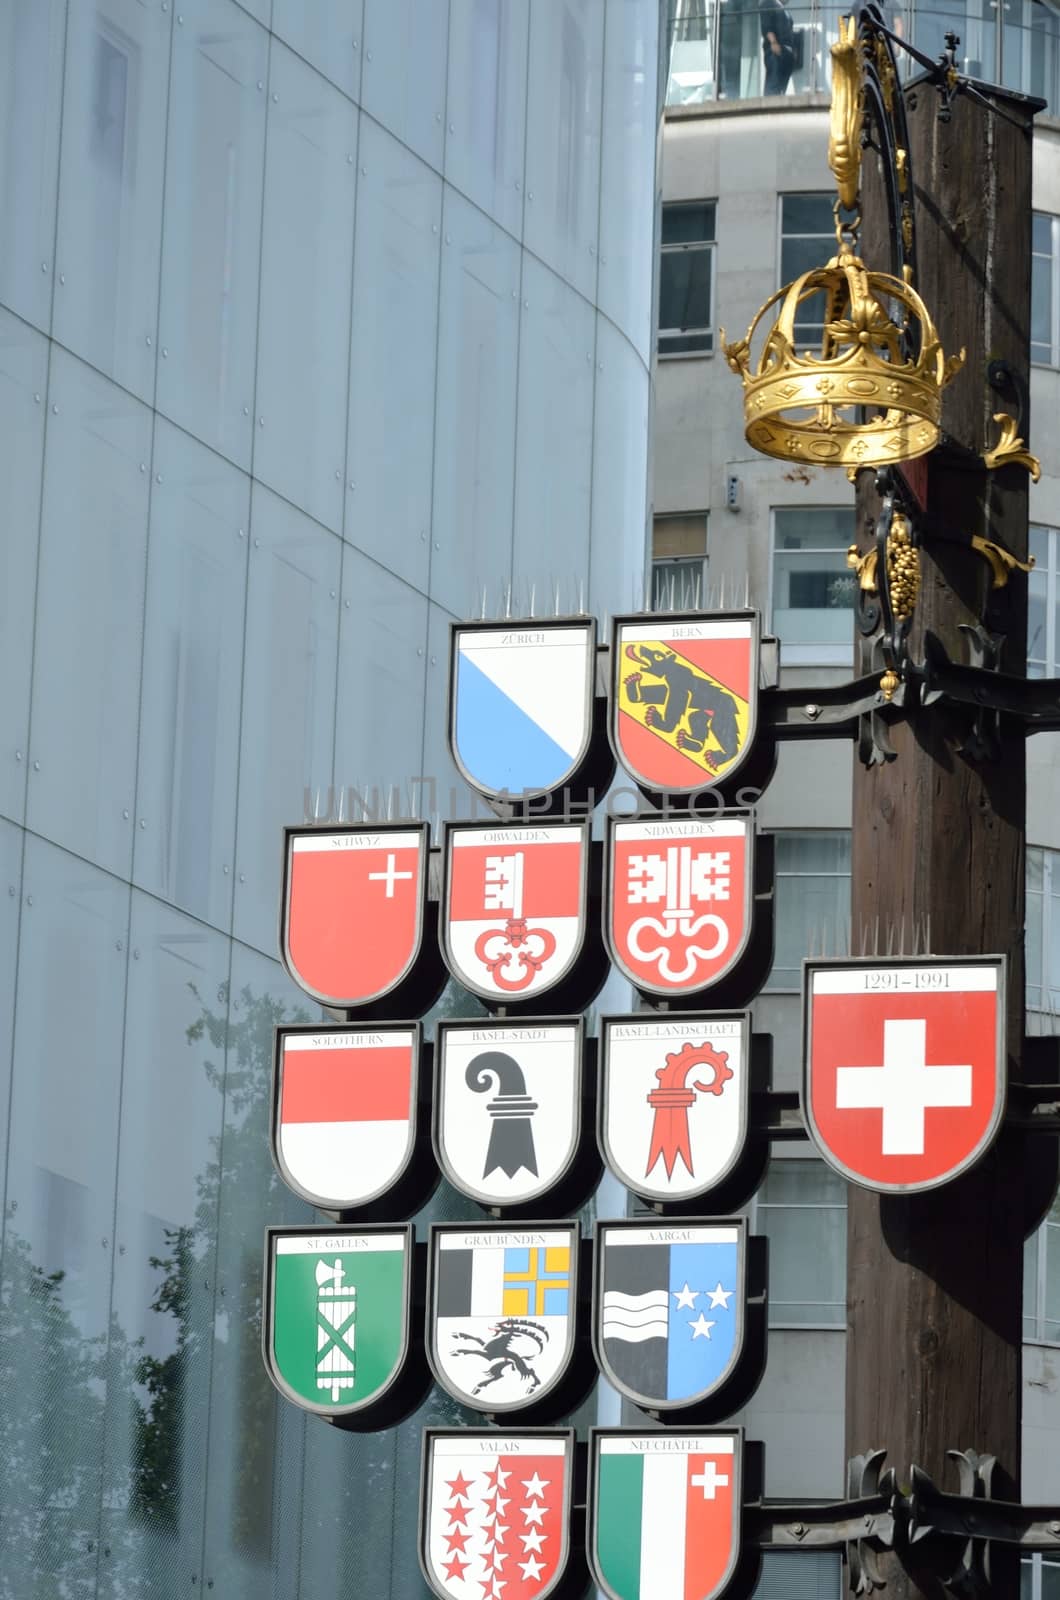 Swiss Square commemeration